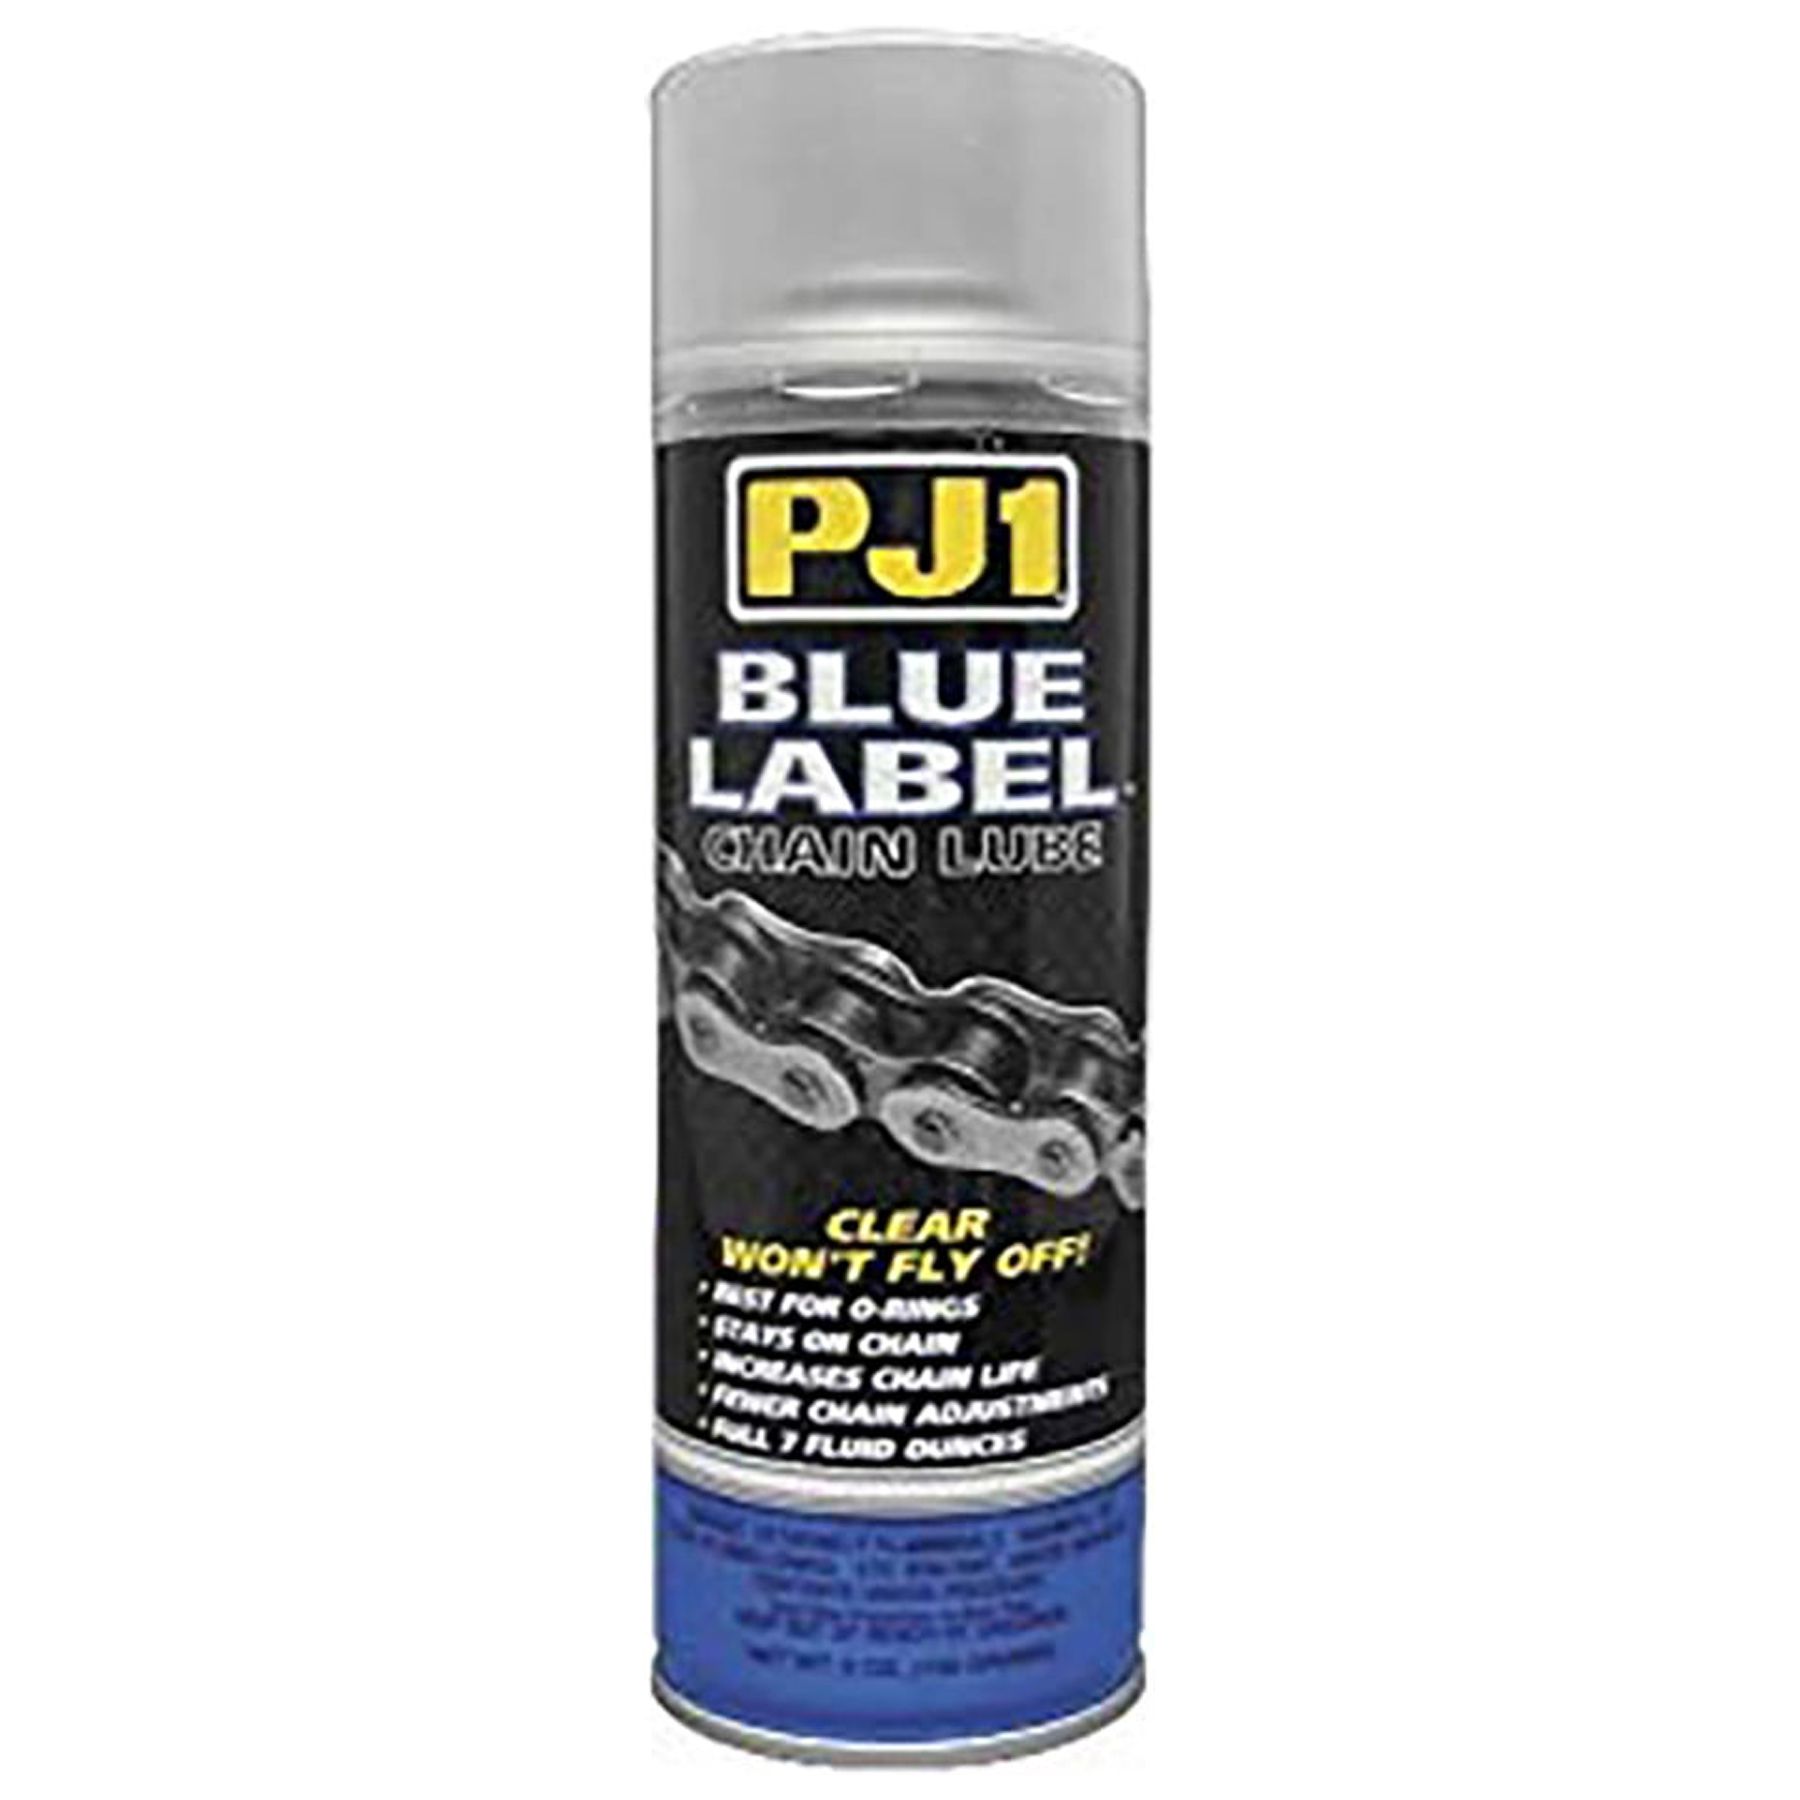 Pj1 13Oz Blue Label Motorcycle Chain Lube